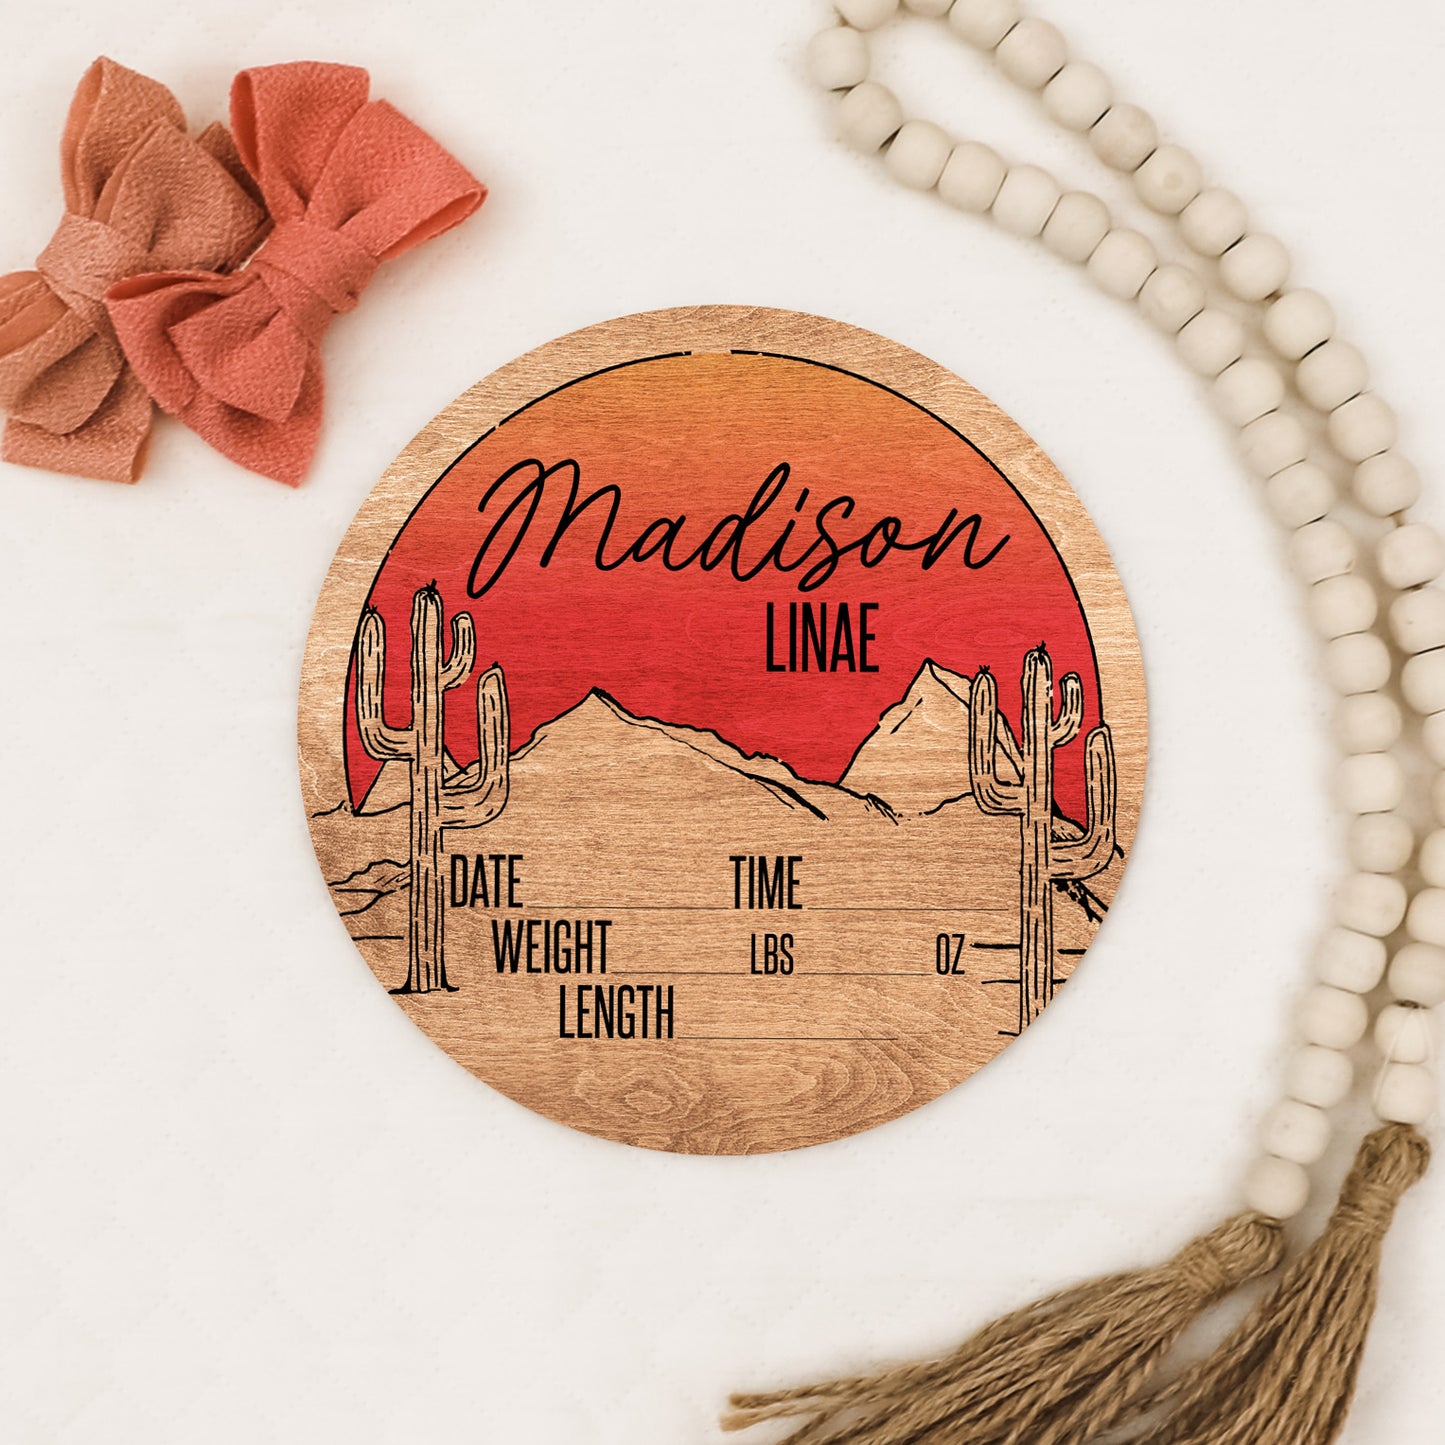 Madison Linae Red Sky Desert Birth Stat